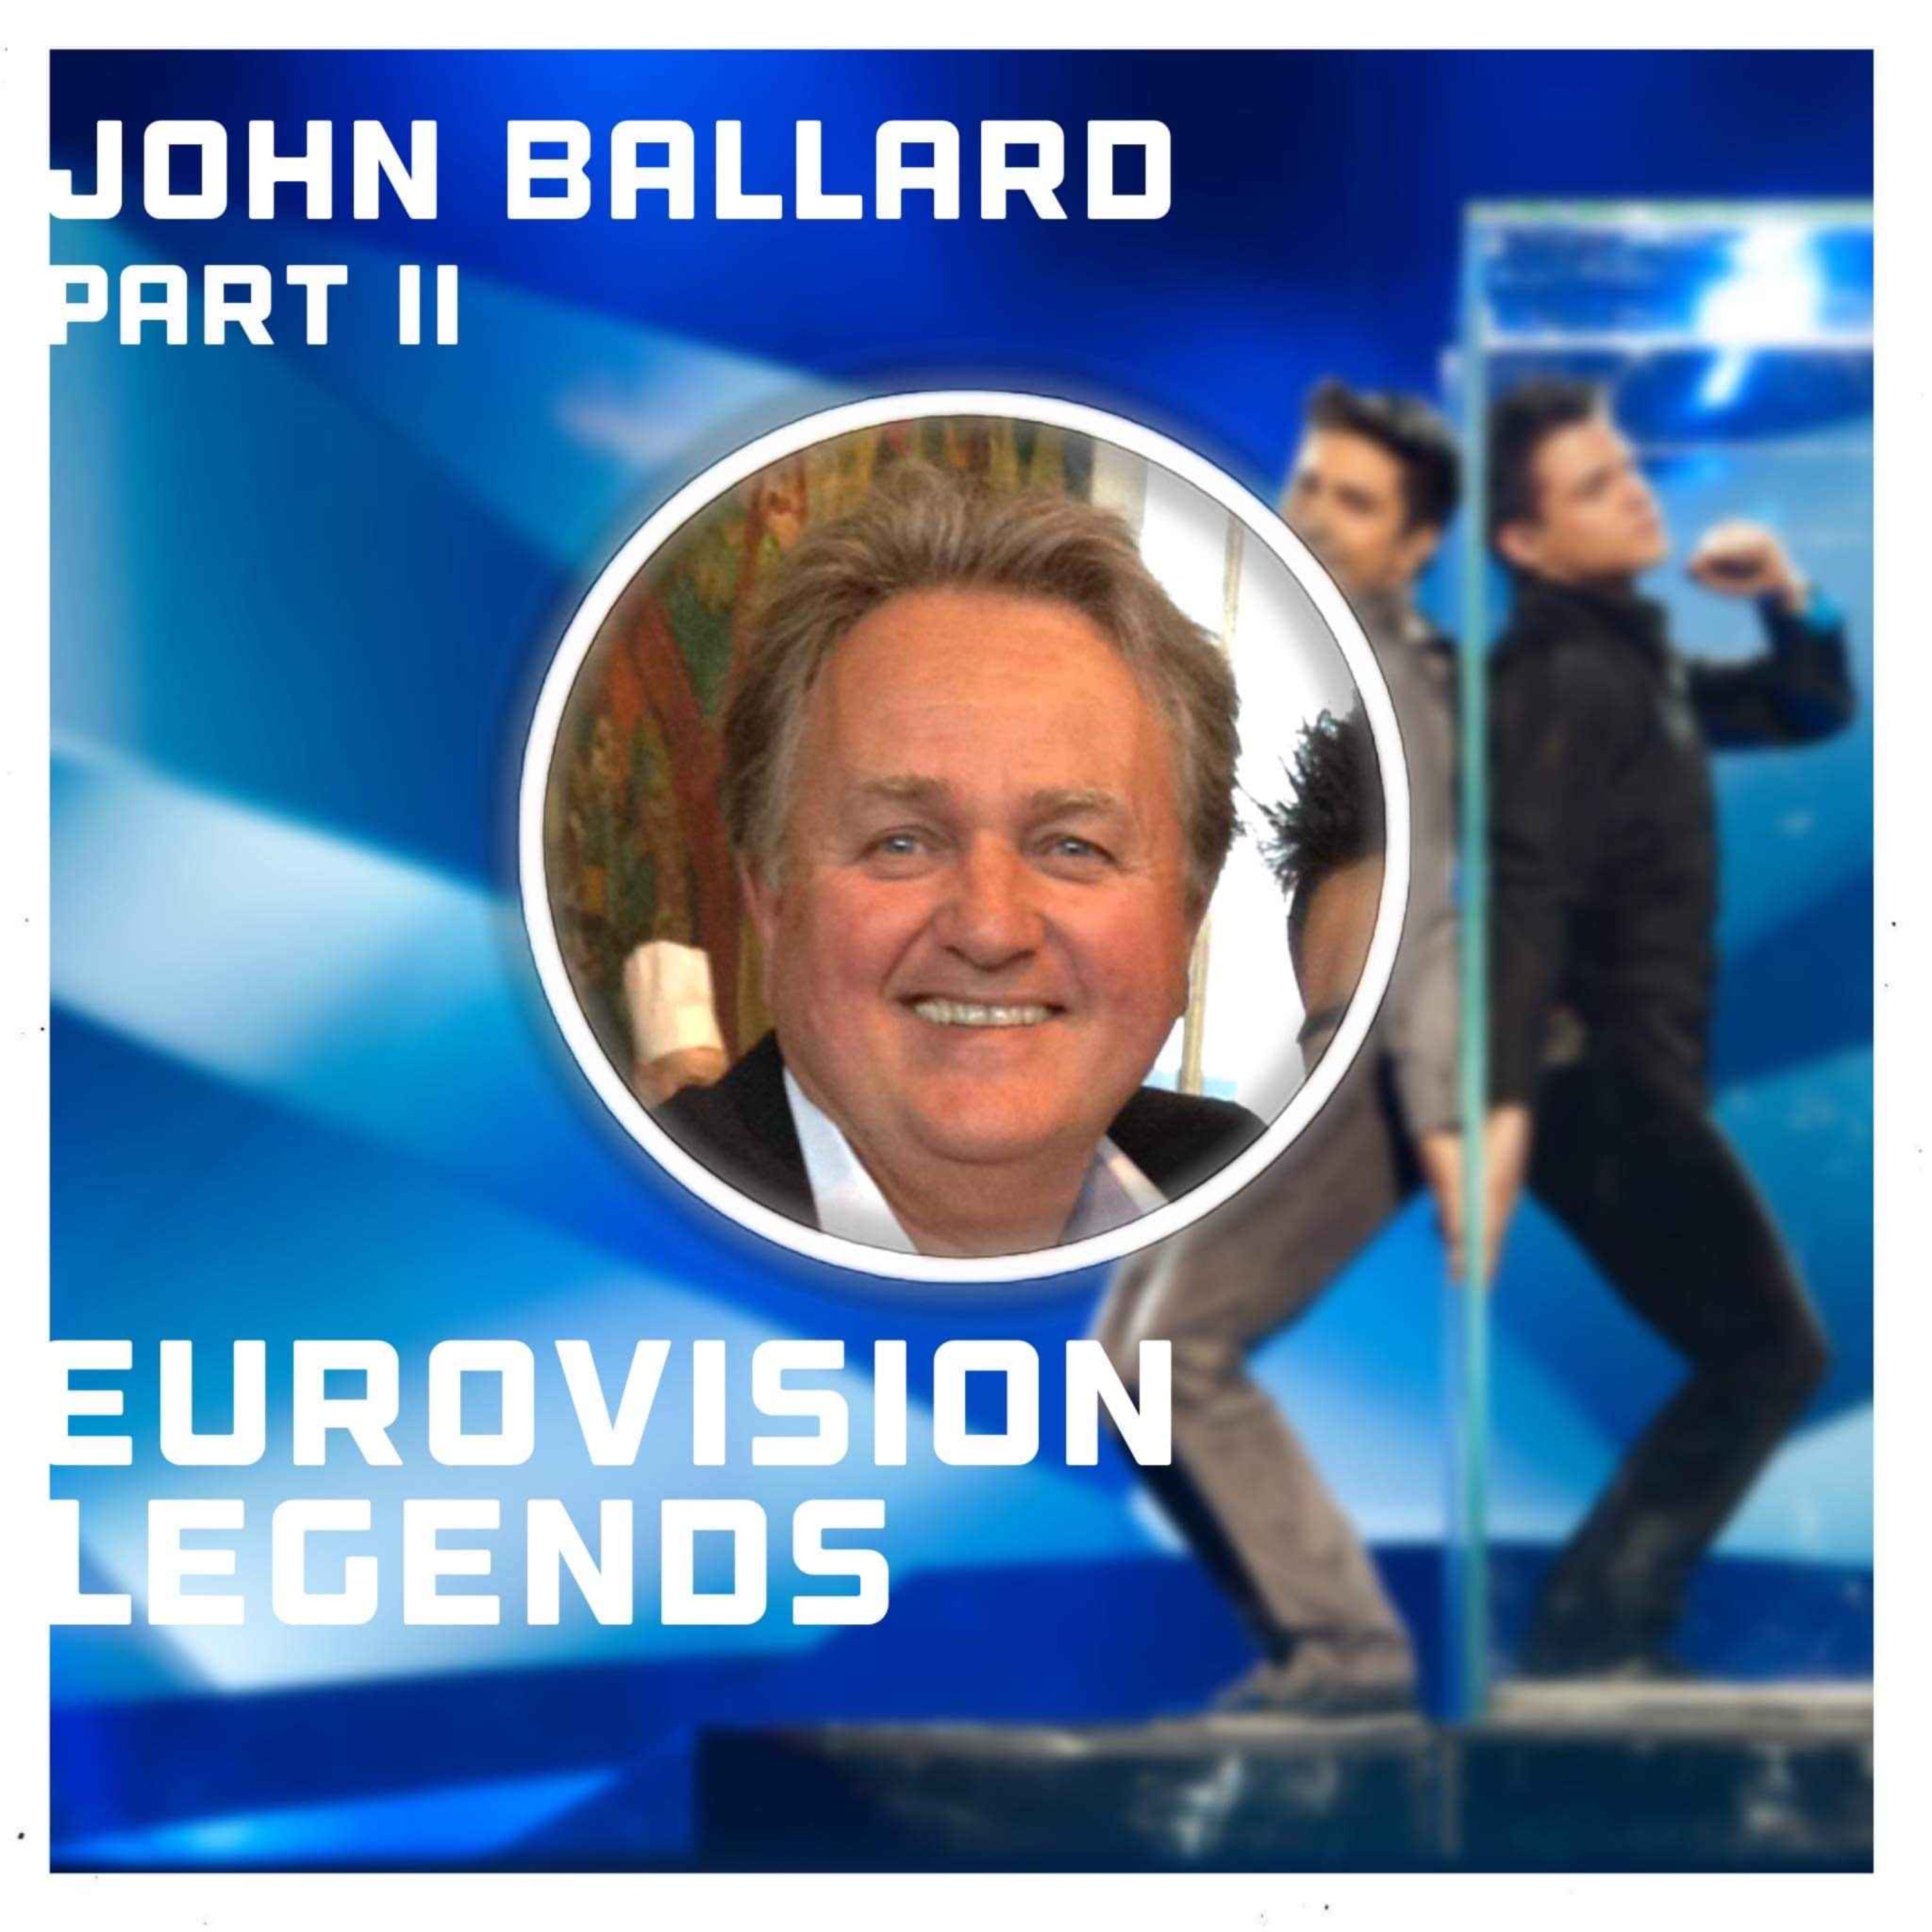 John Ballard part II